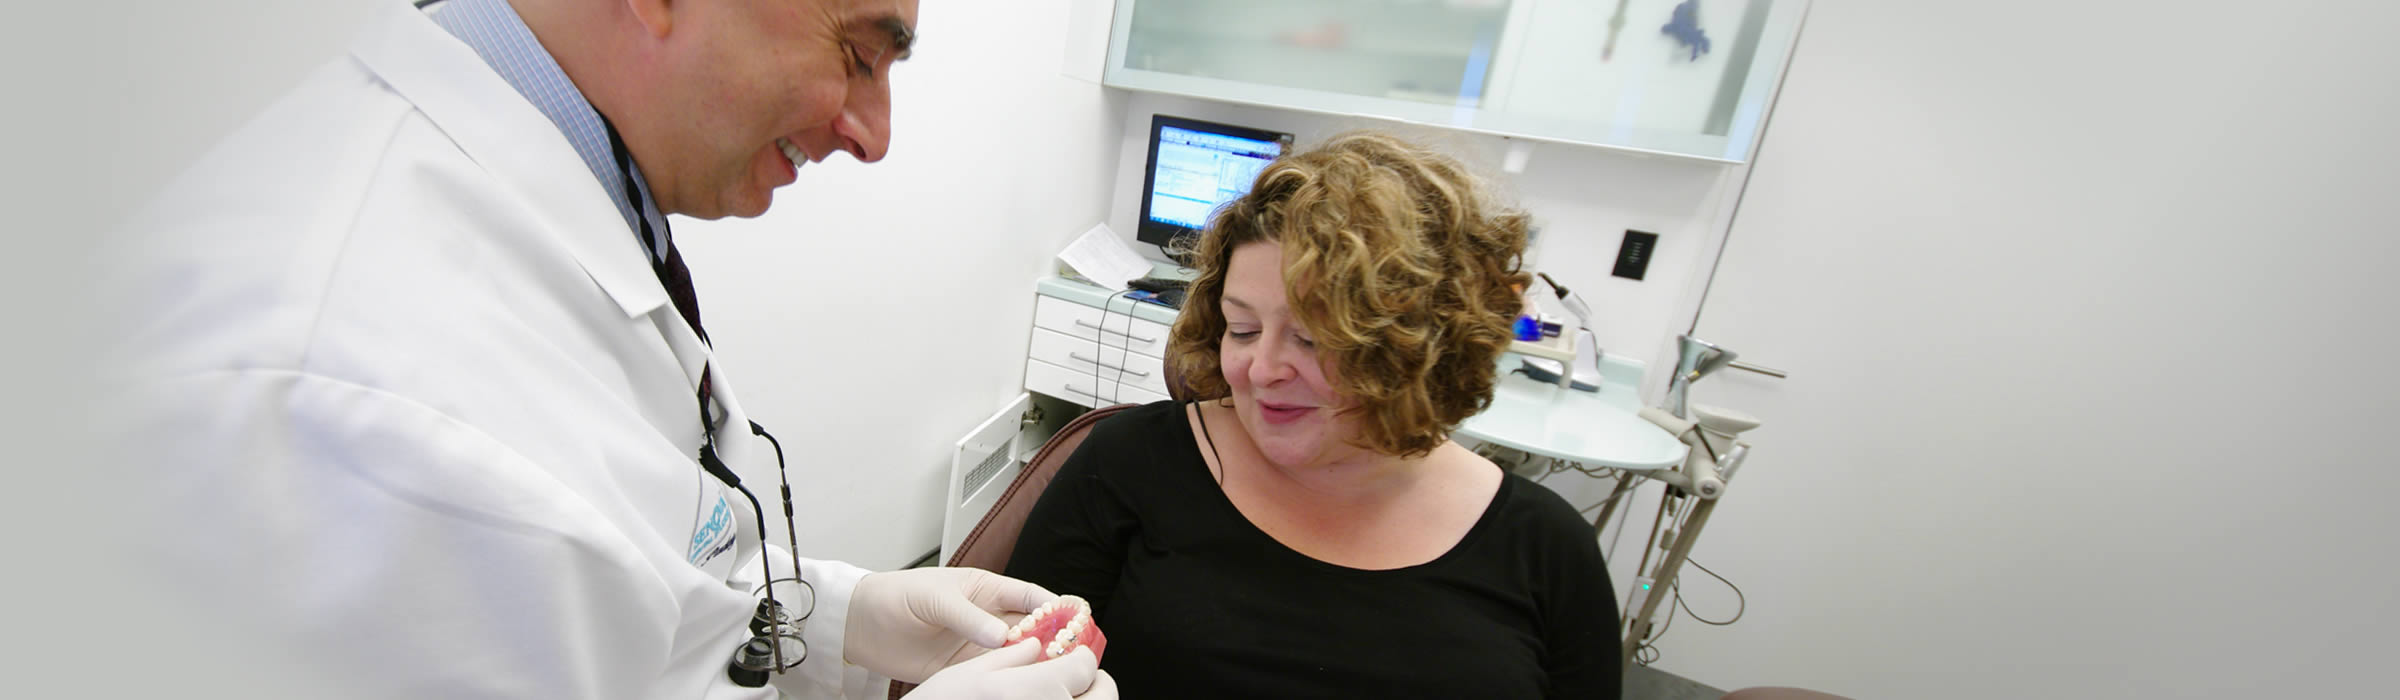 Patient receiving dental advice at our Watford dentist, Senova Dental Studios in Watford, Hertfordshire